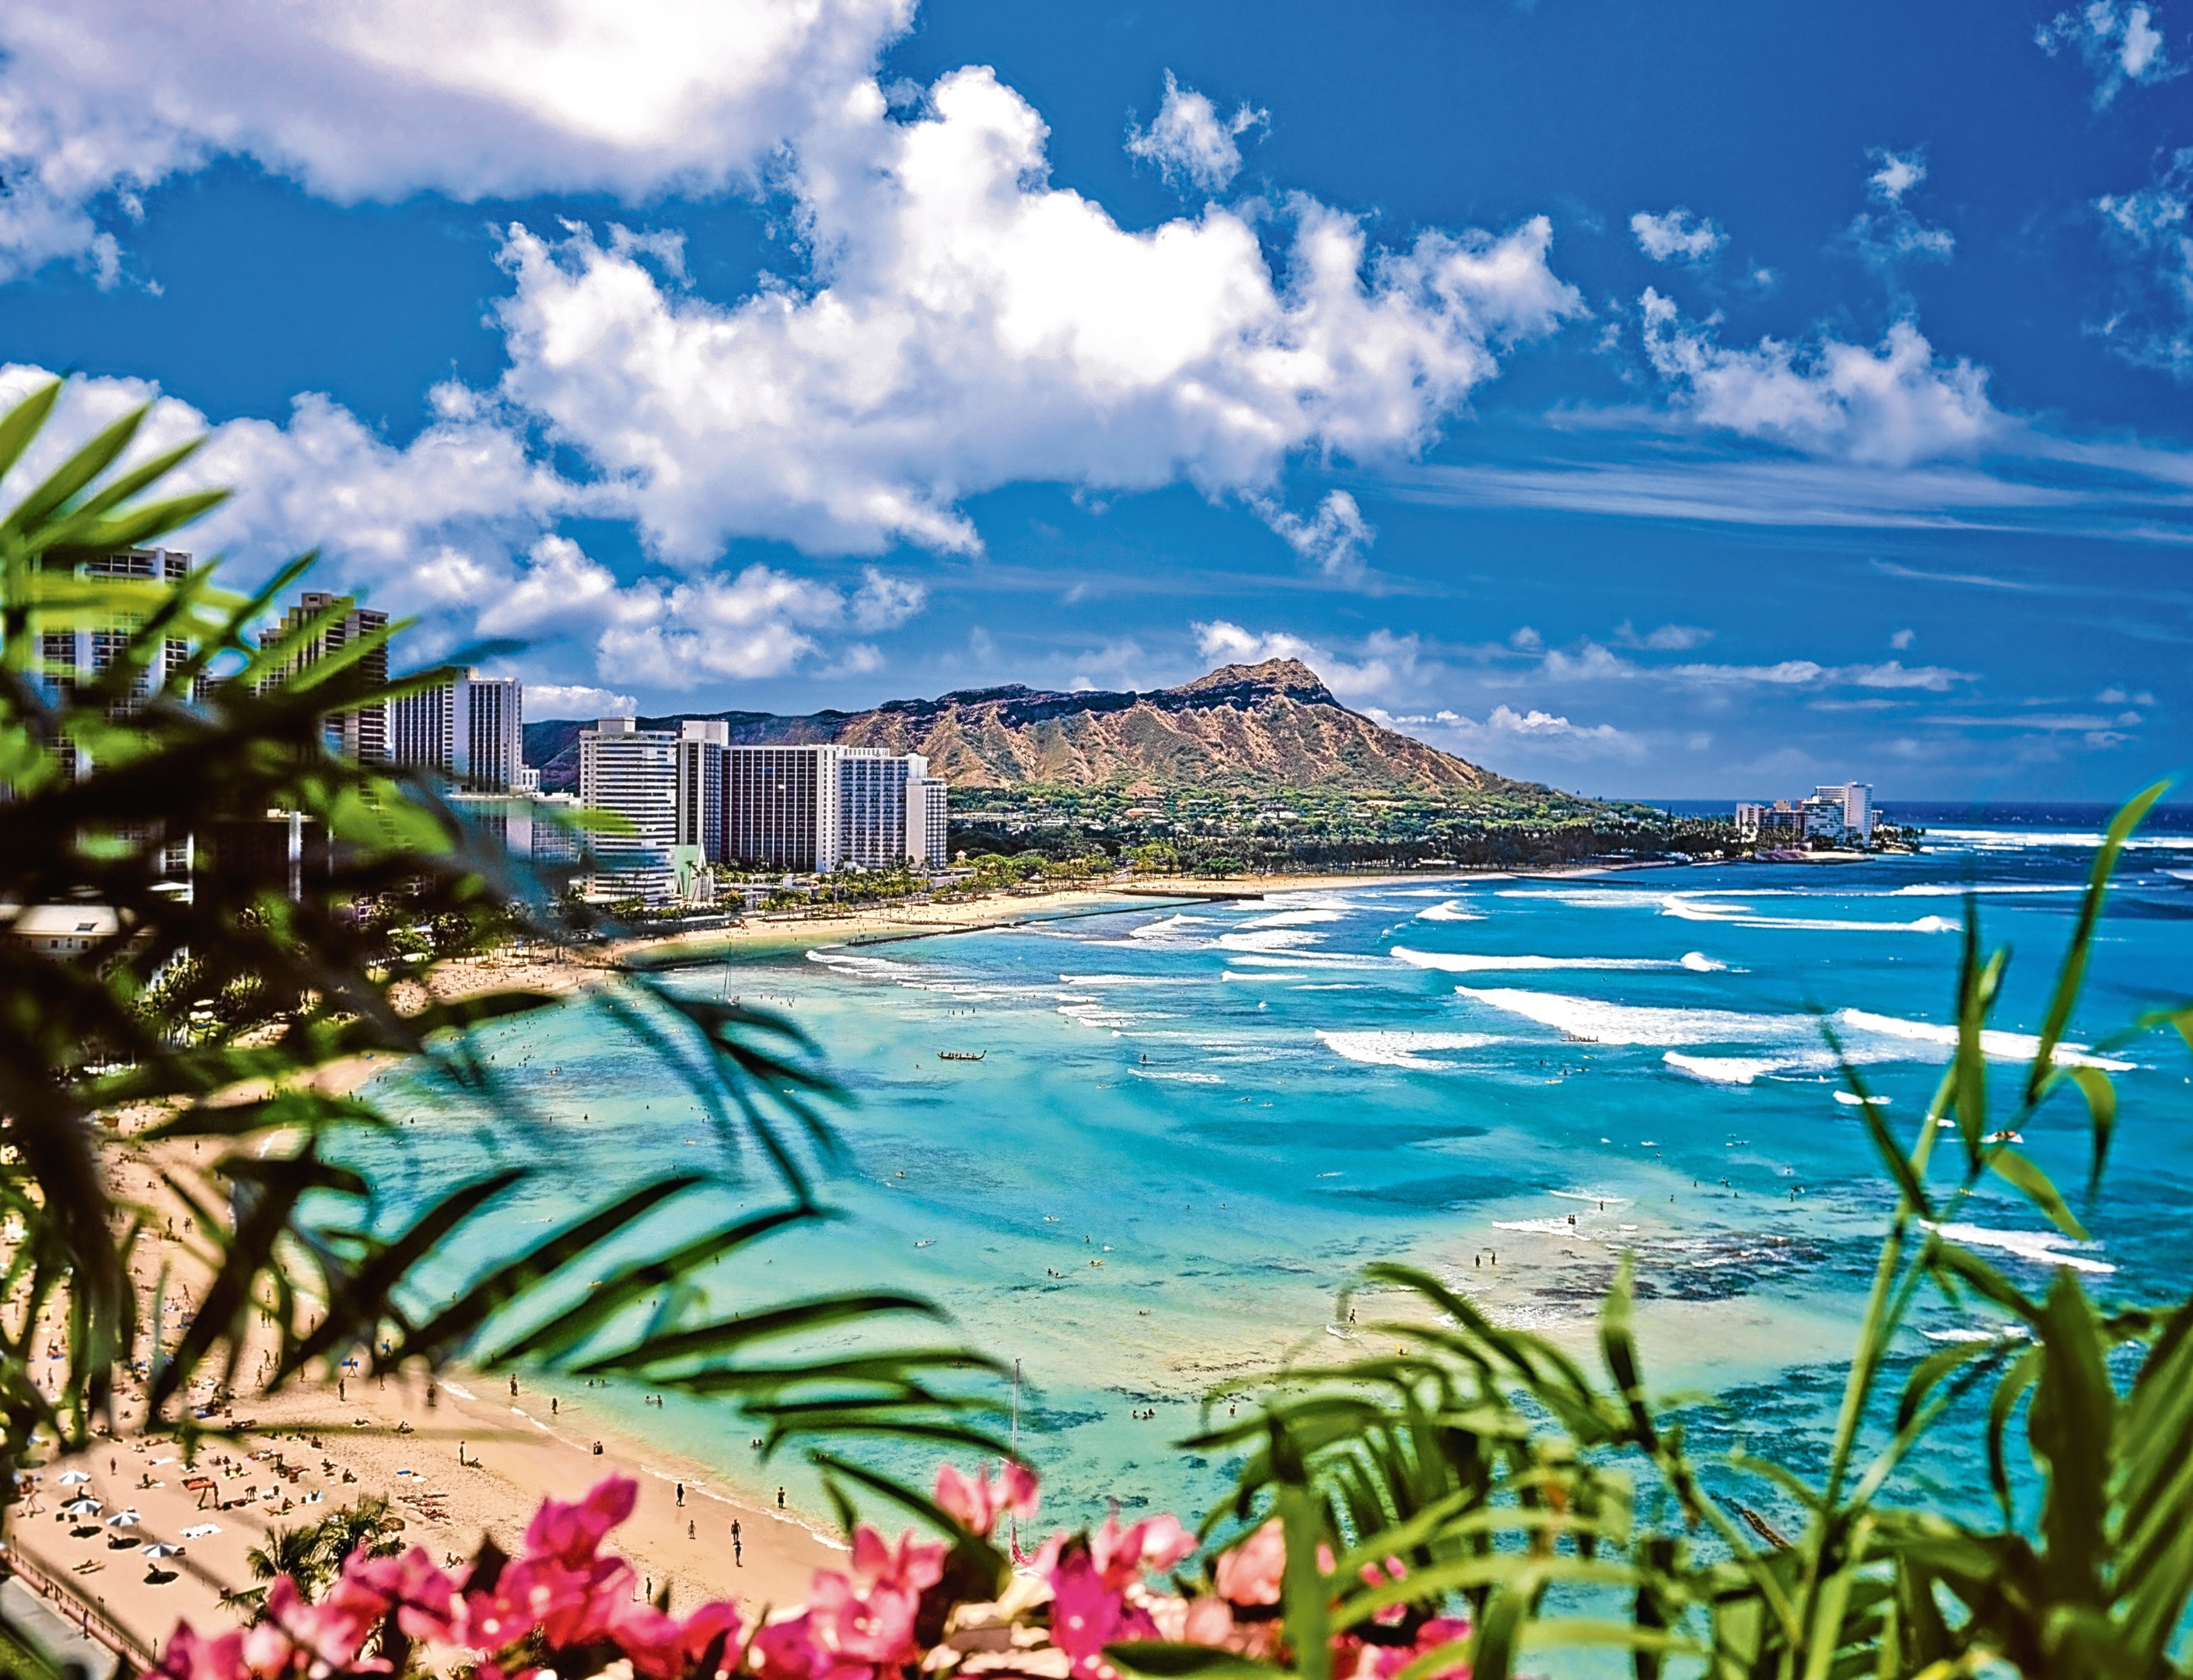 Waikiki beach and diamond head in Hawaii (Getty Images/iStock)